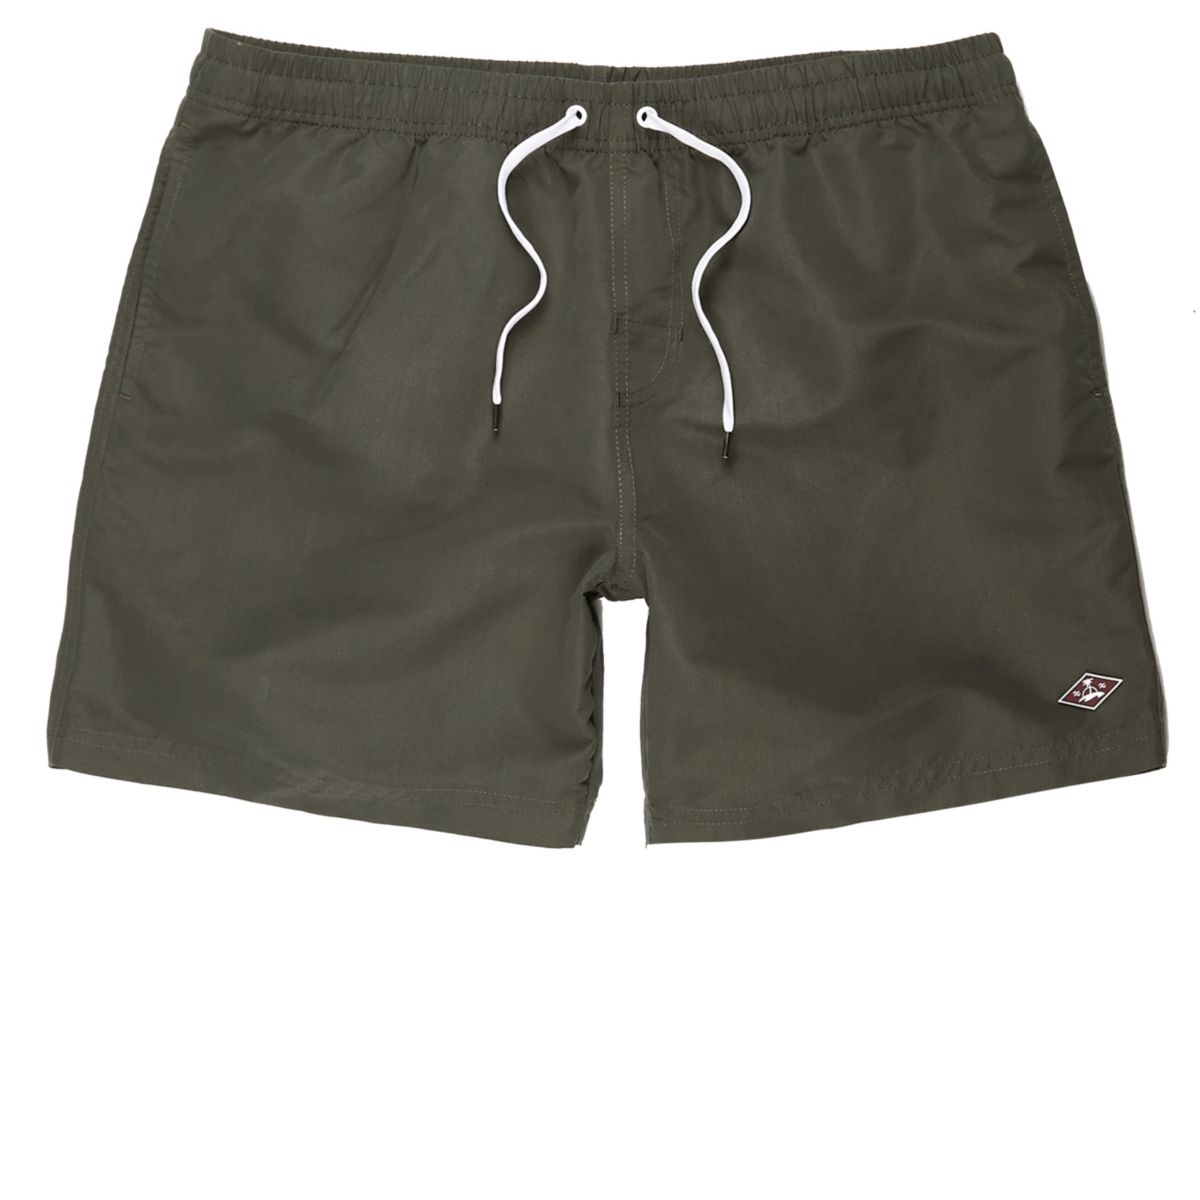 Khaki green swim shorts - Shorts - Sale - men